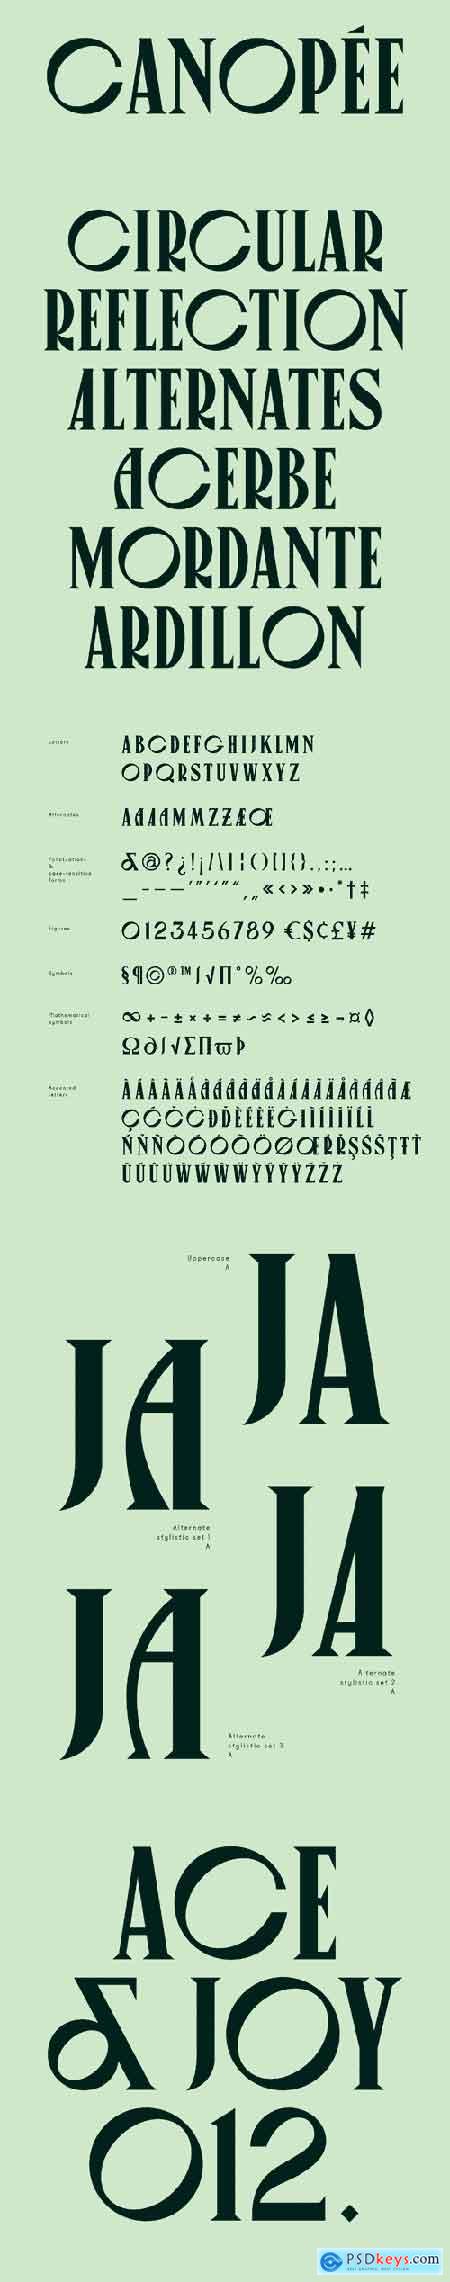 VJ Canopee Typeface